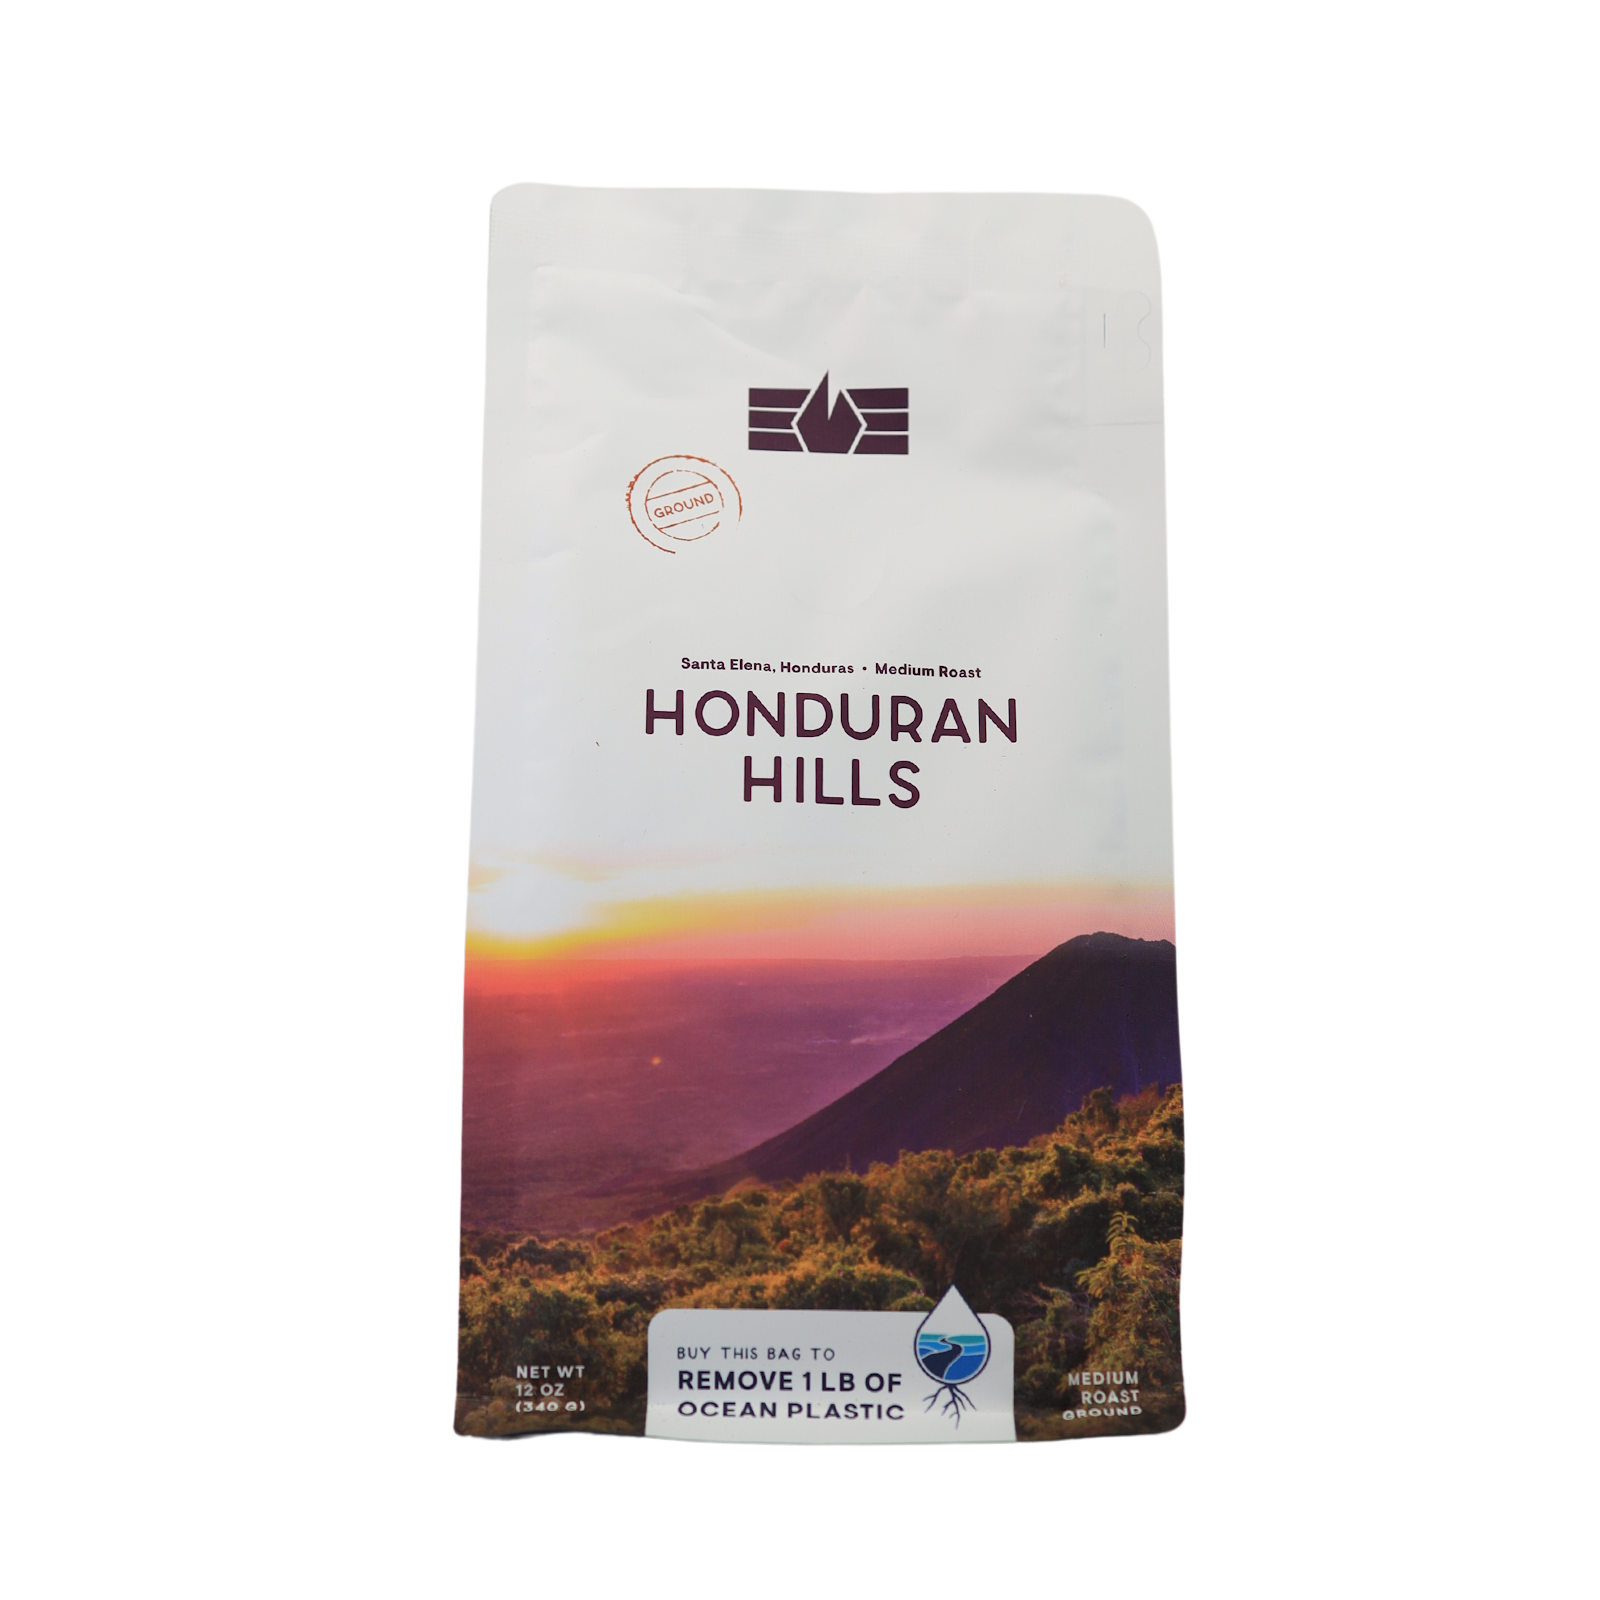 Honduran Hills - 12oz bag